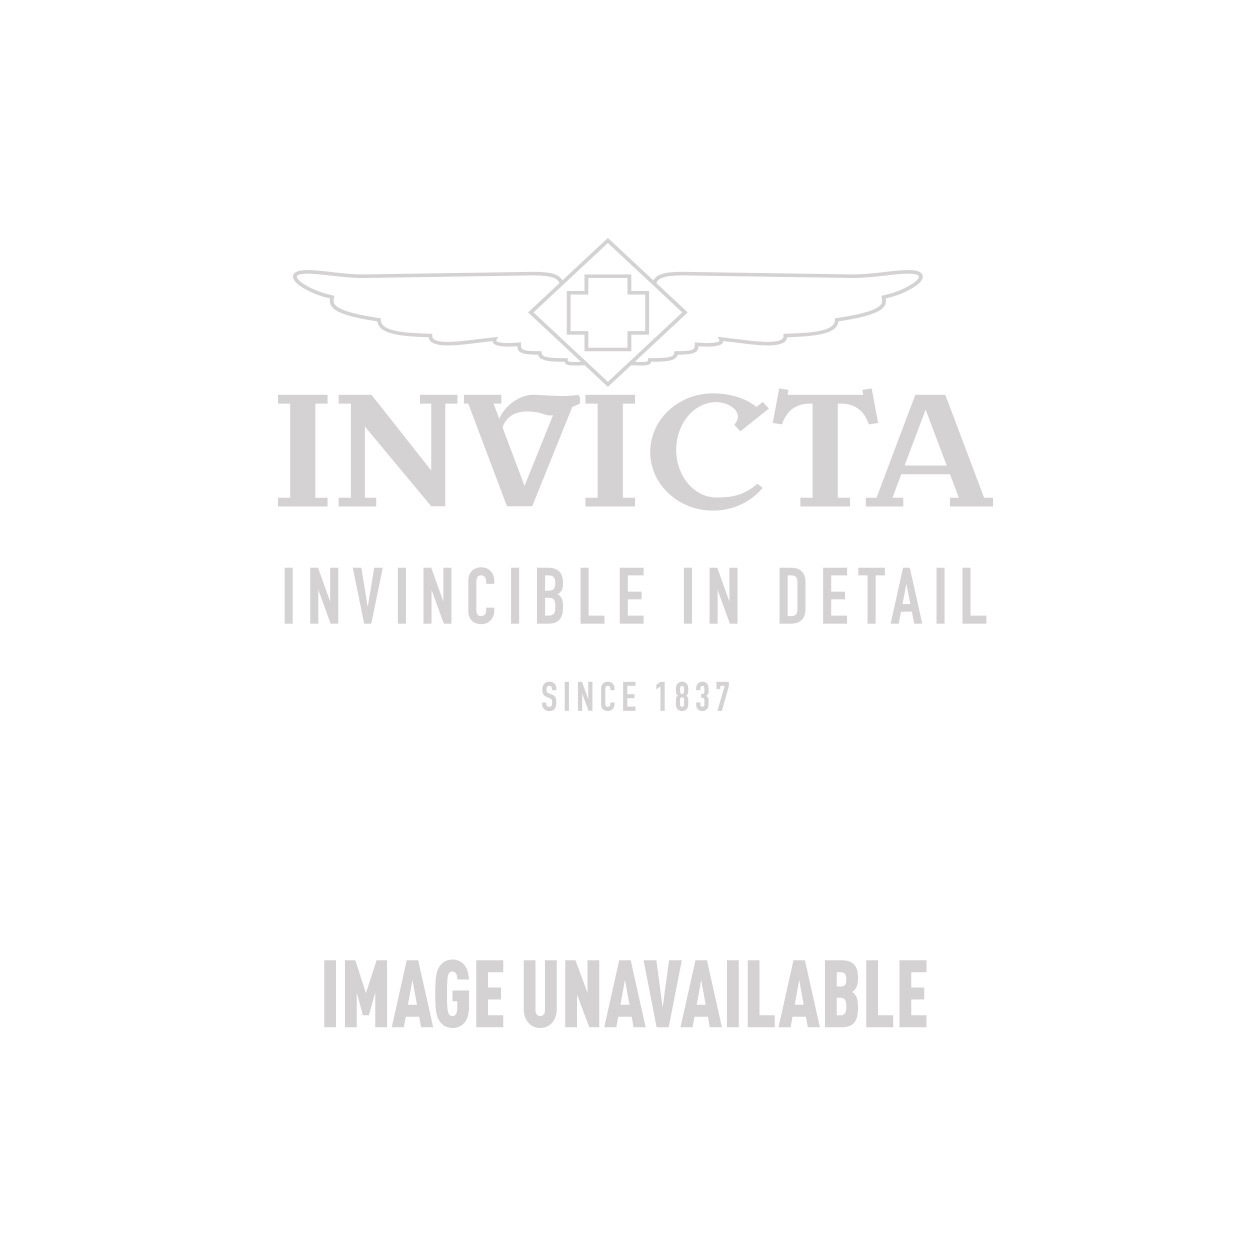 Invicta Pro Diver Swiss Movement Quartz Stainless Steel - Model 2961